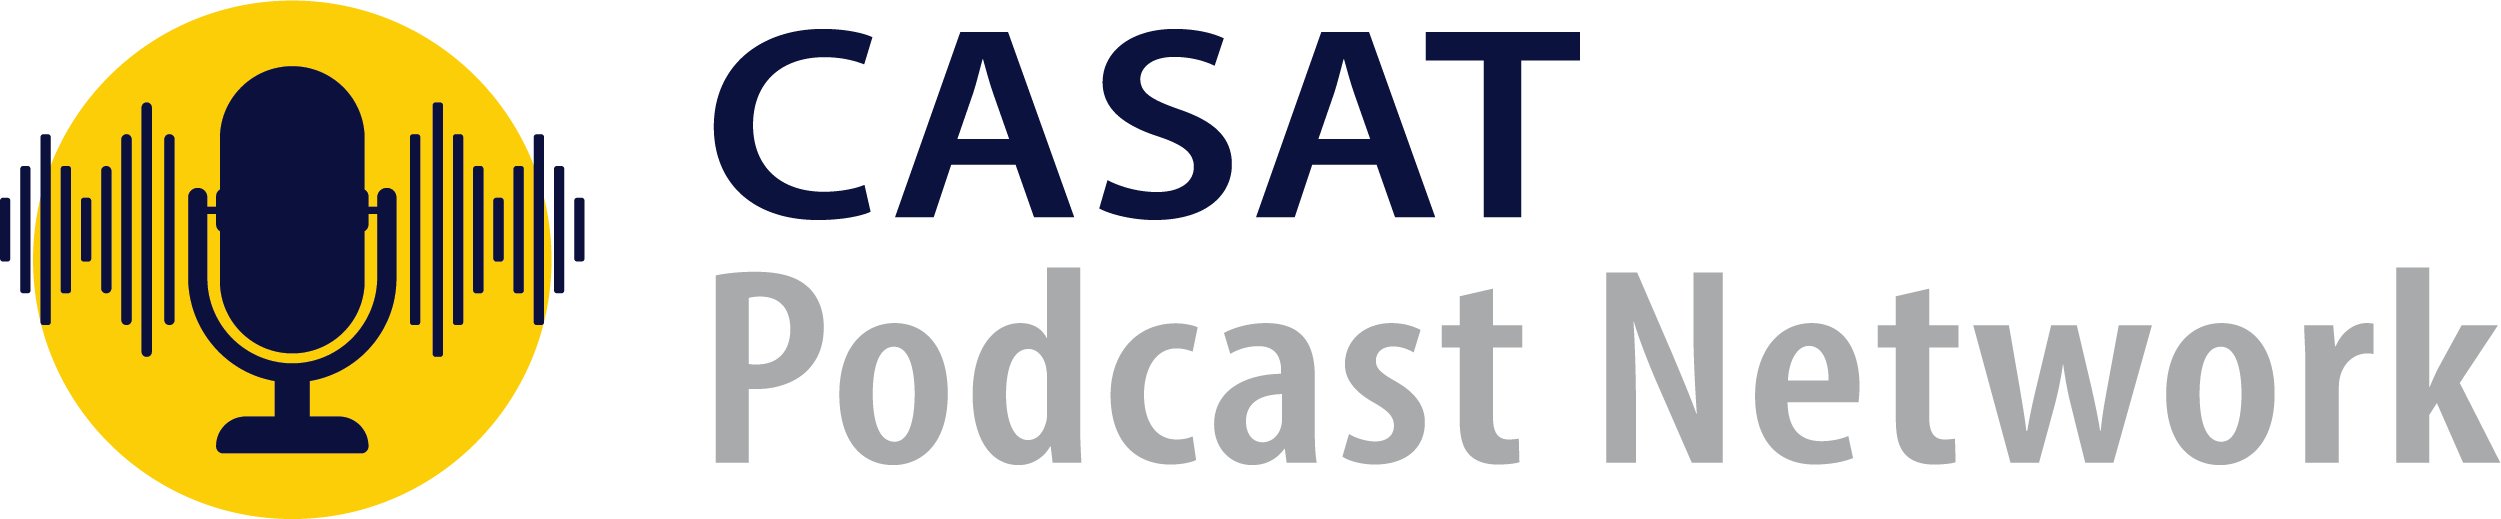 CASAT Podcast Network Logo